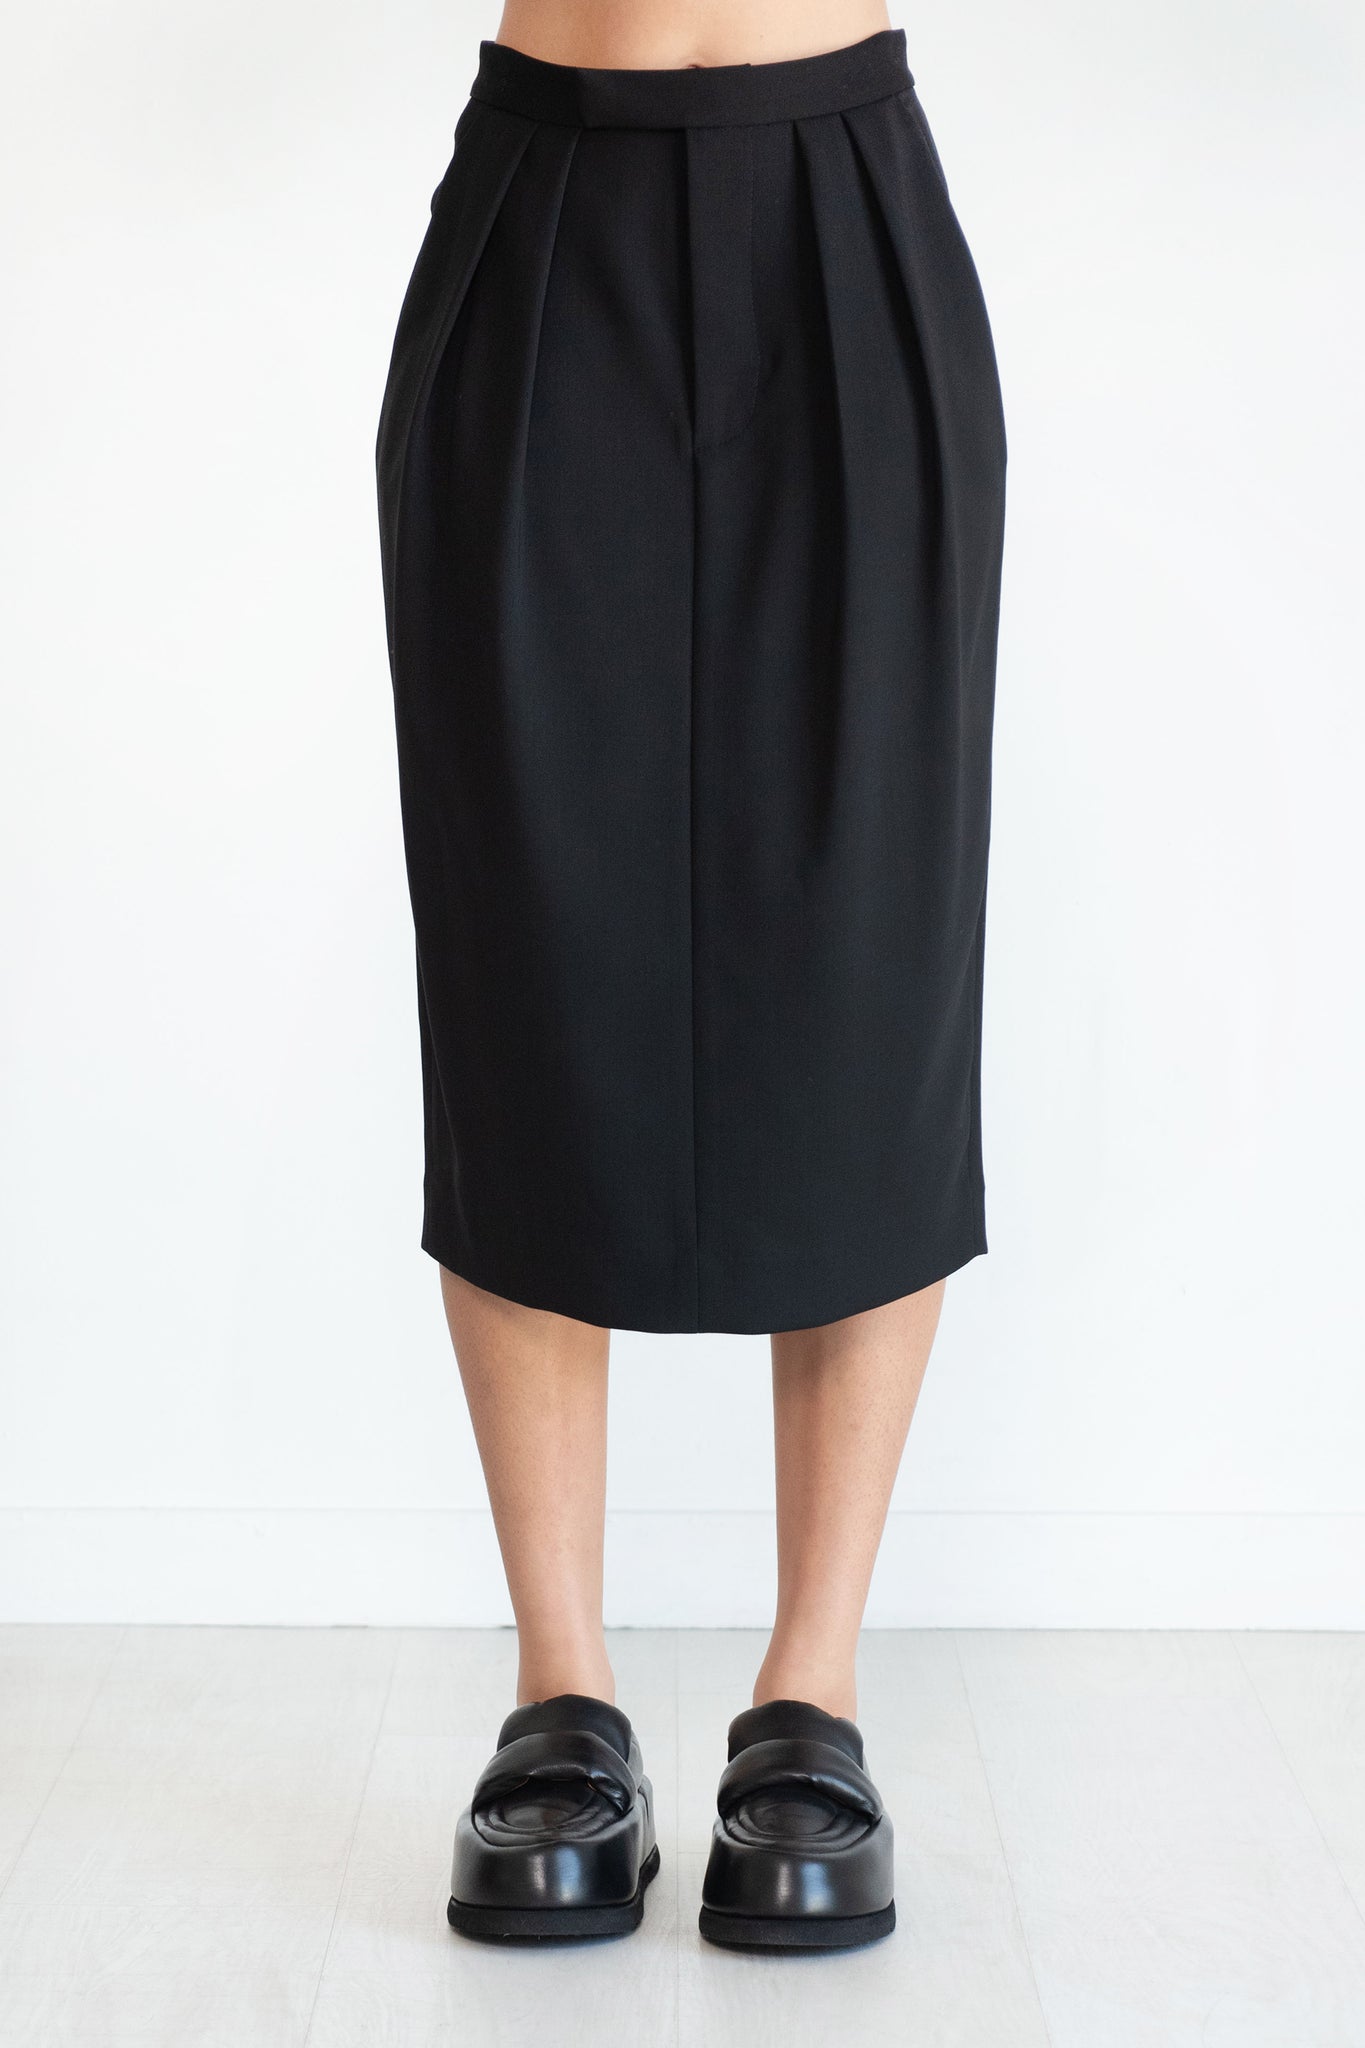 Rachel Comey Danziger Skirt, Black & White – Kick Pleat